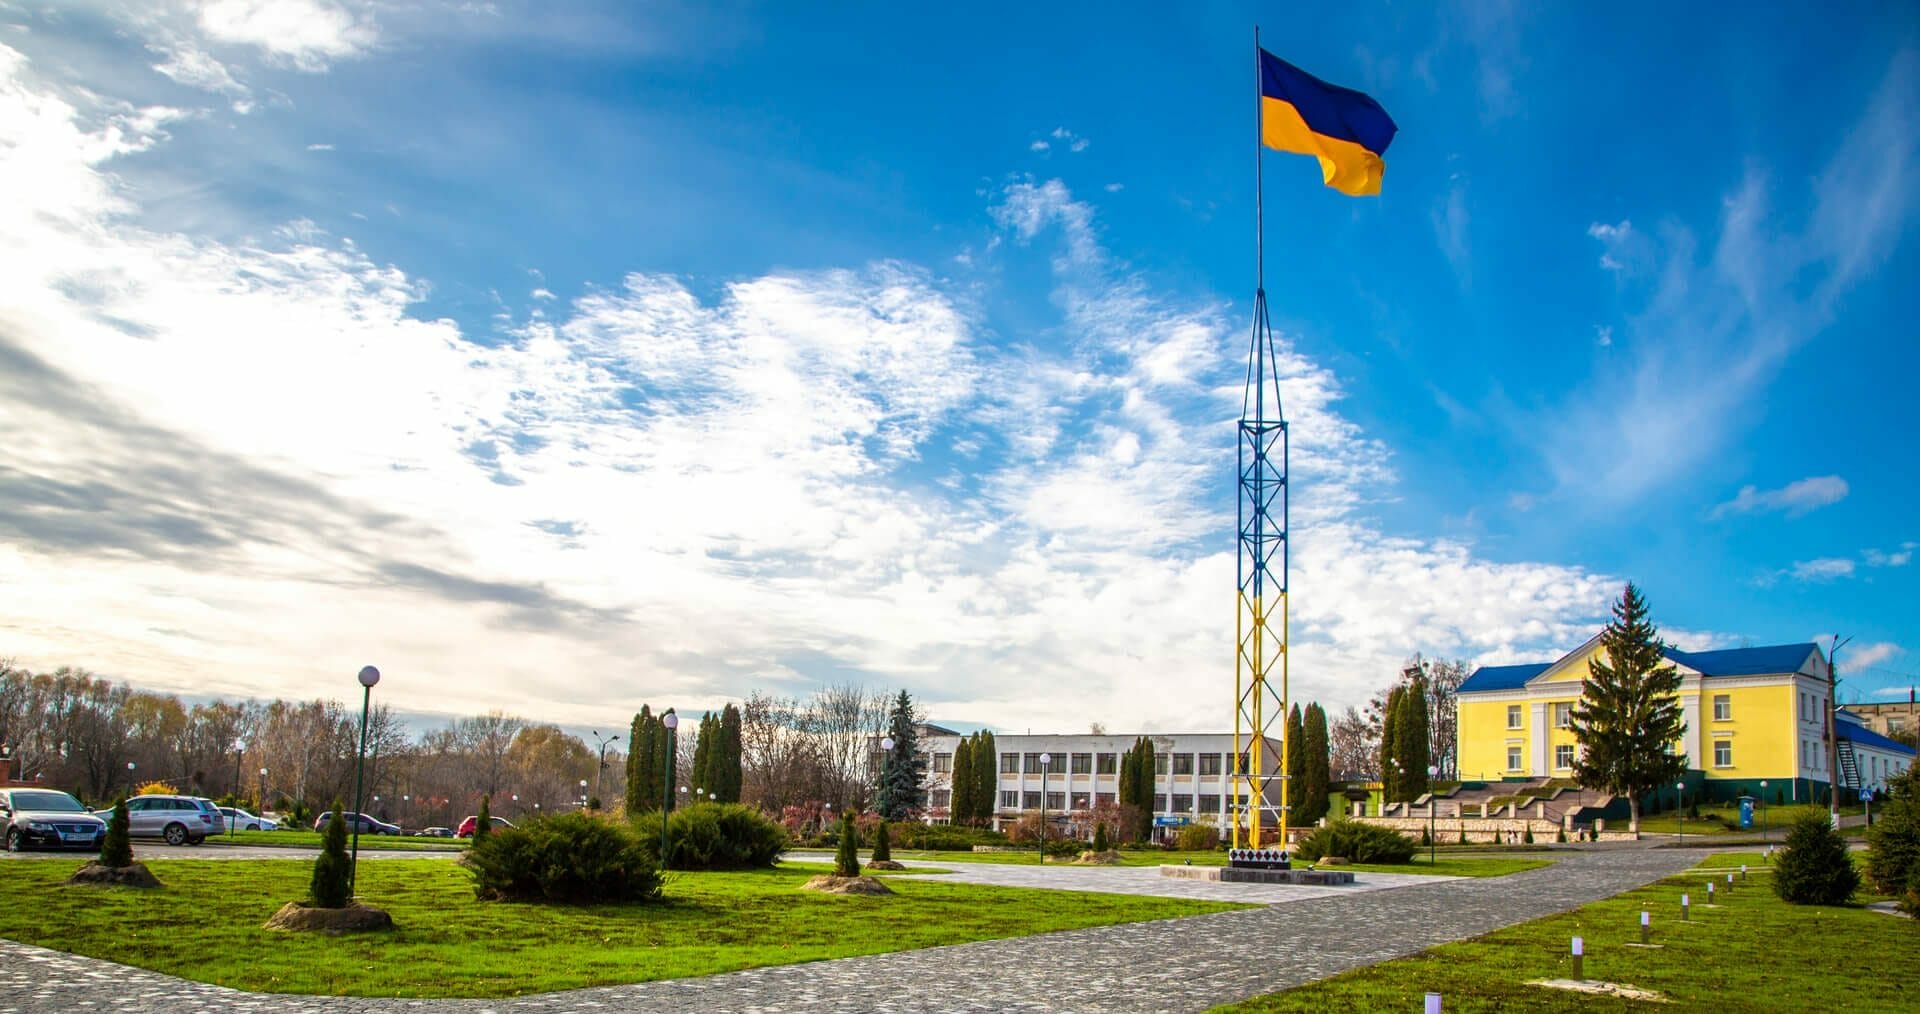 Settlement of Lypova Dolyna, the largest state flag in the Lypova Dolyna Community